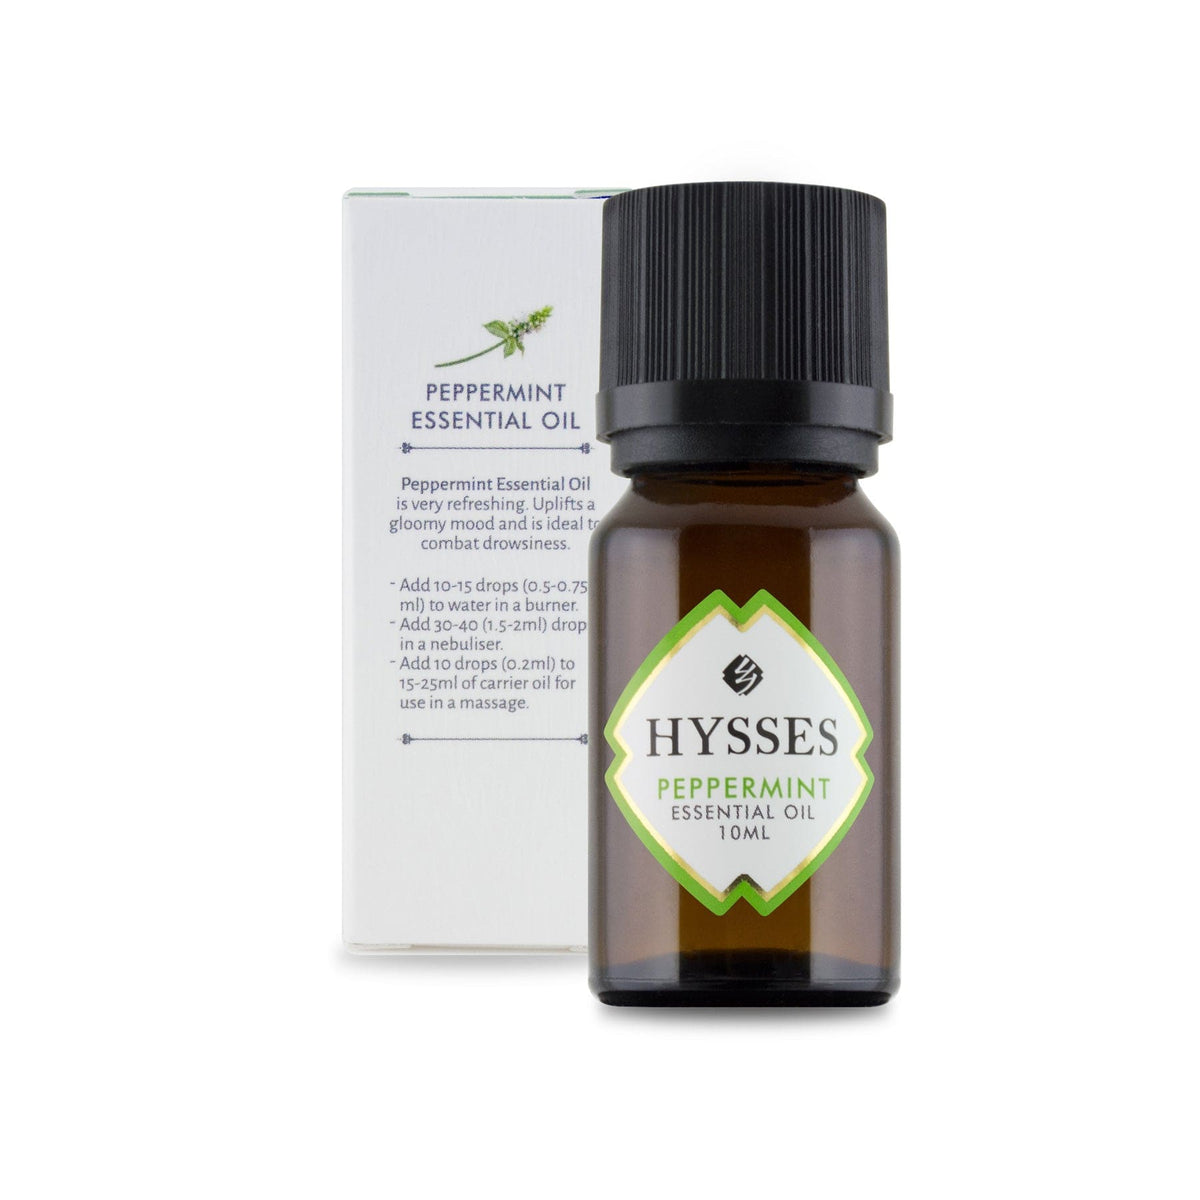 Hysses Essential Oil Essential Oil Peppermint, 10ml